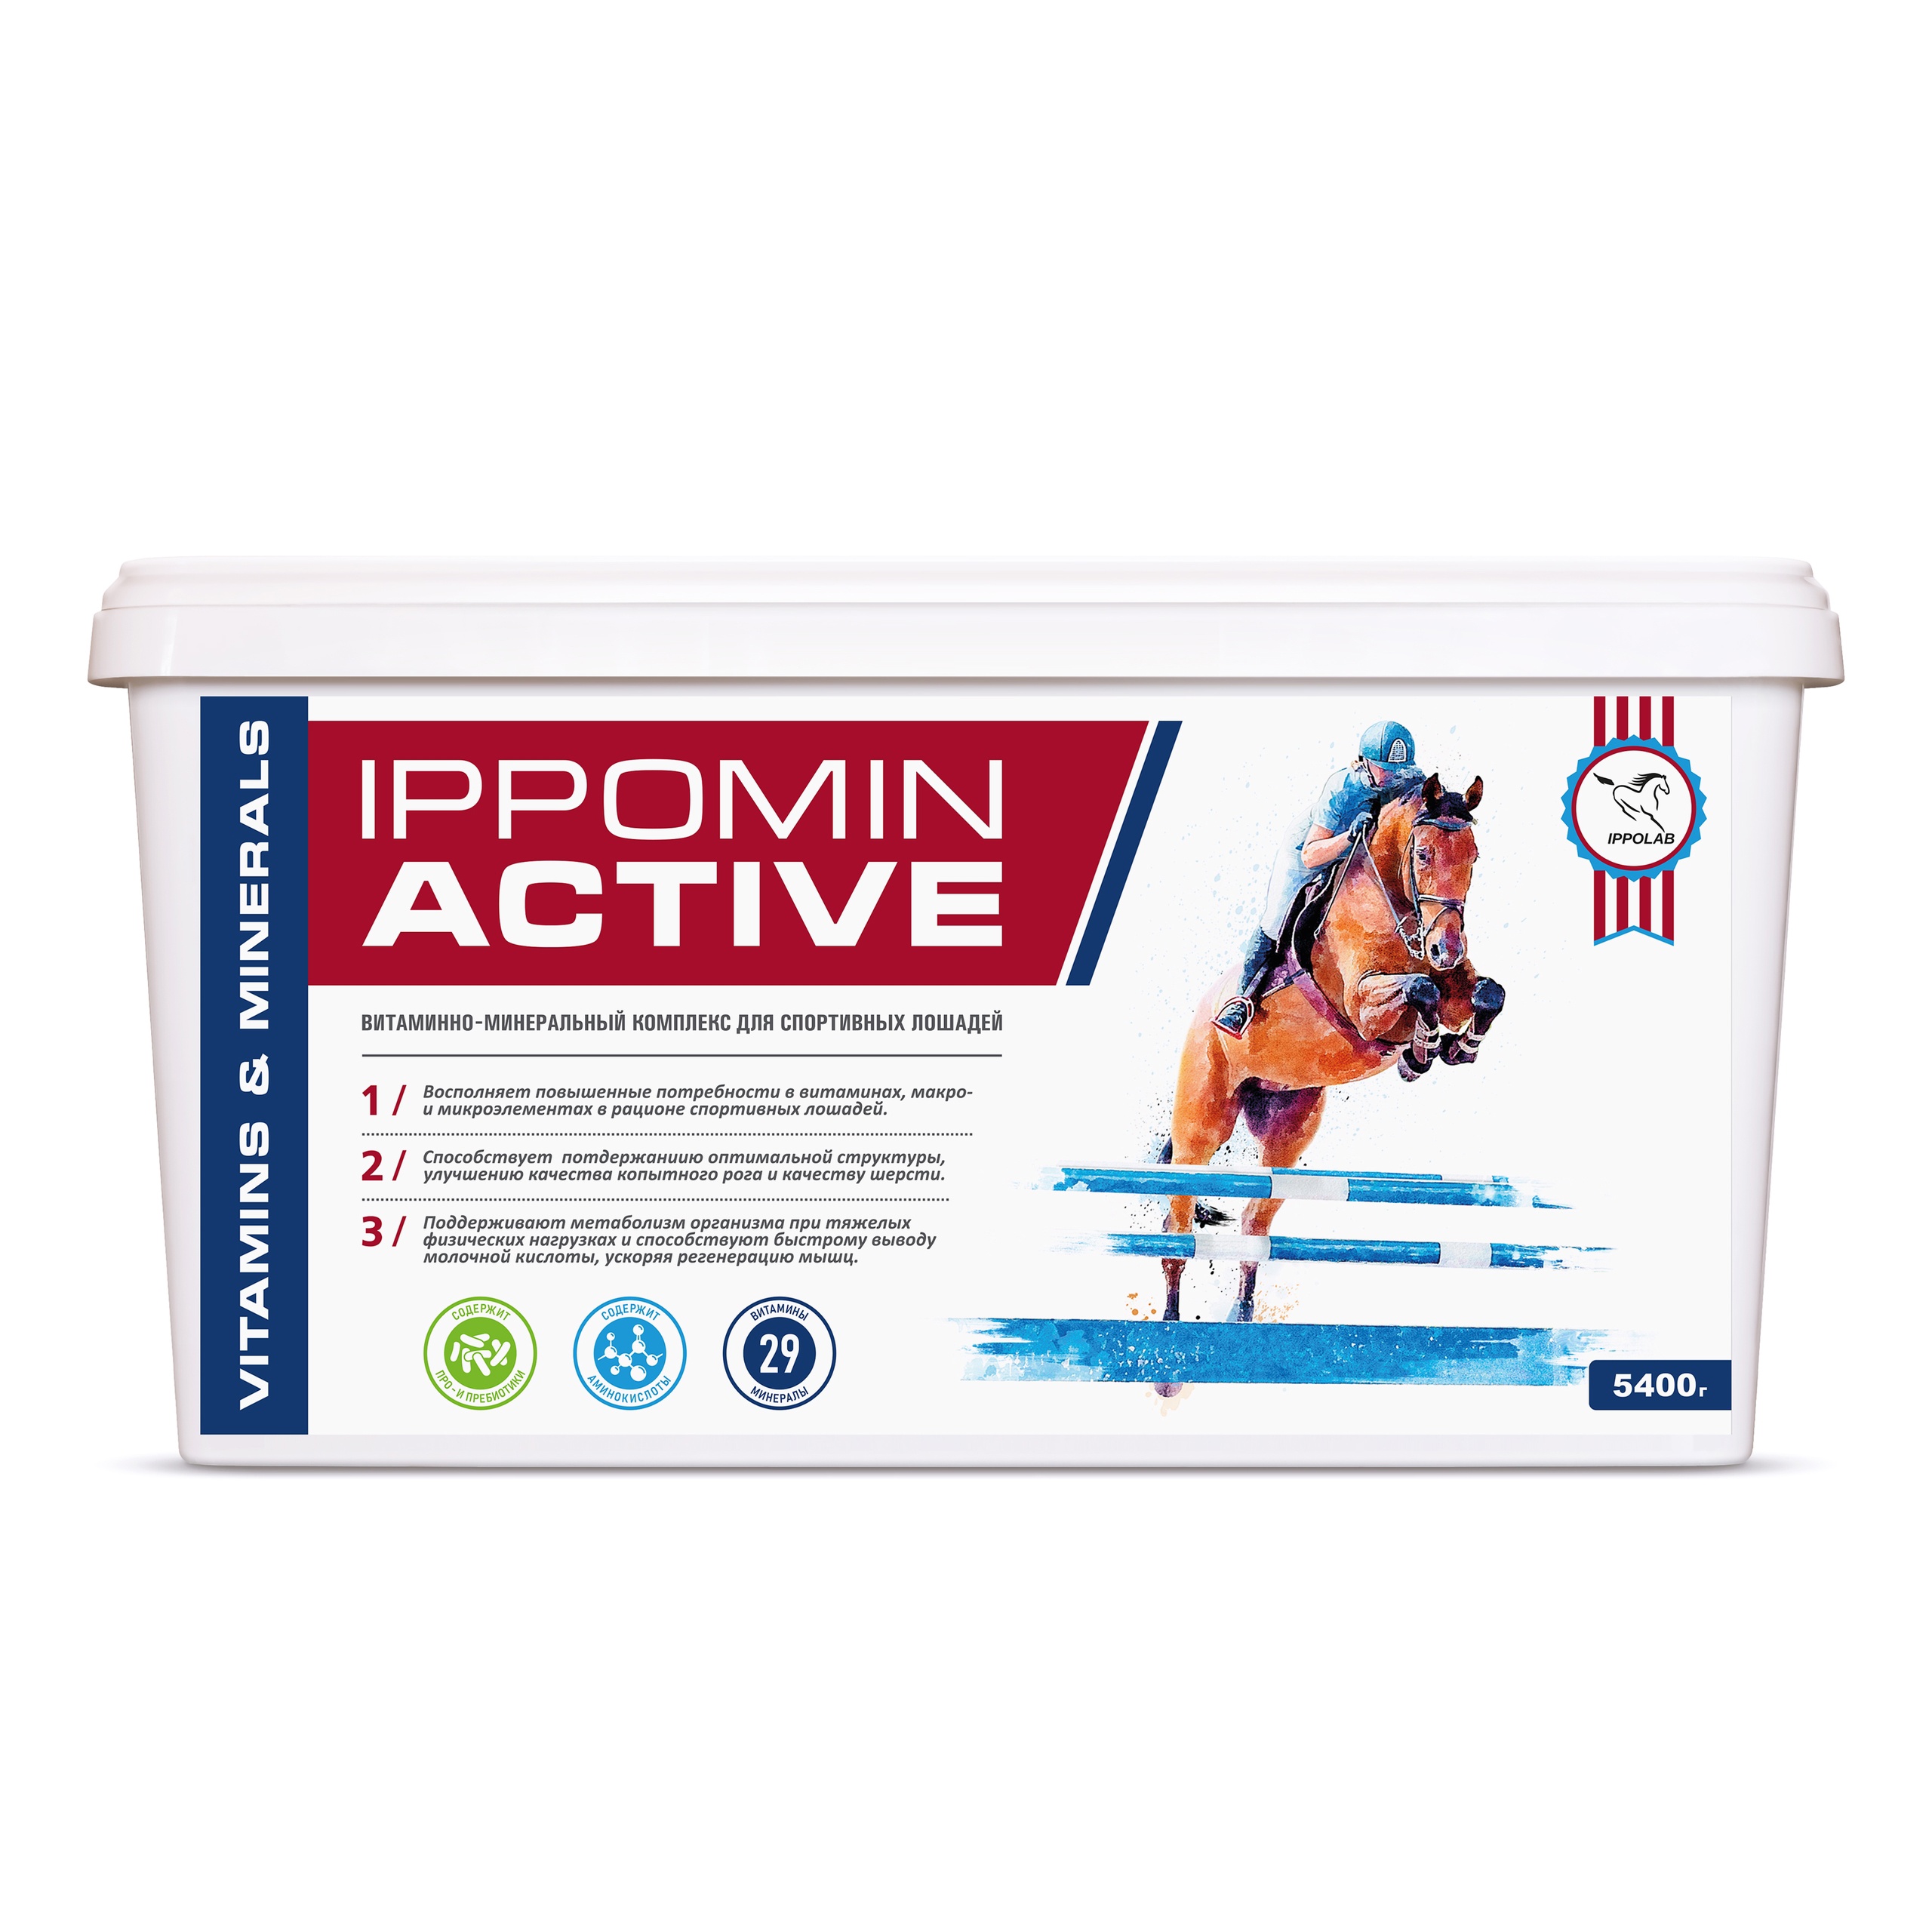 IPPOMIN ACTIVE, - , 5,4 